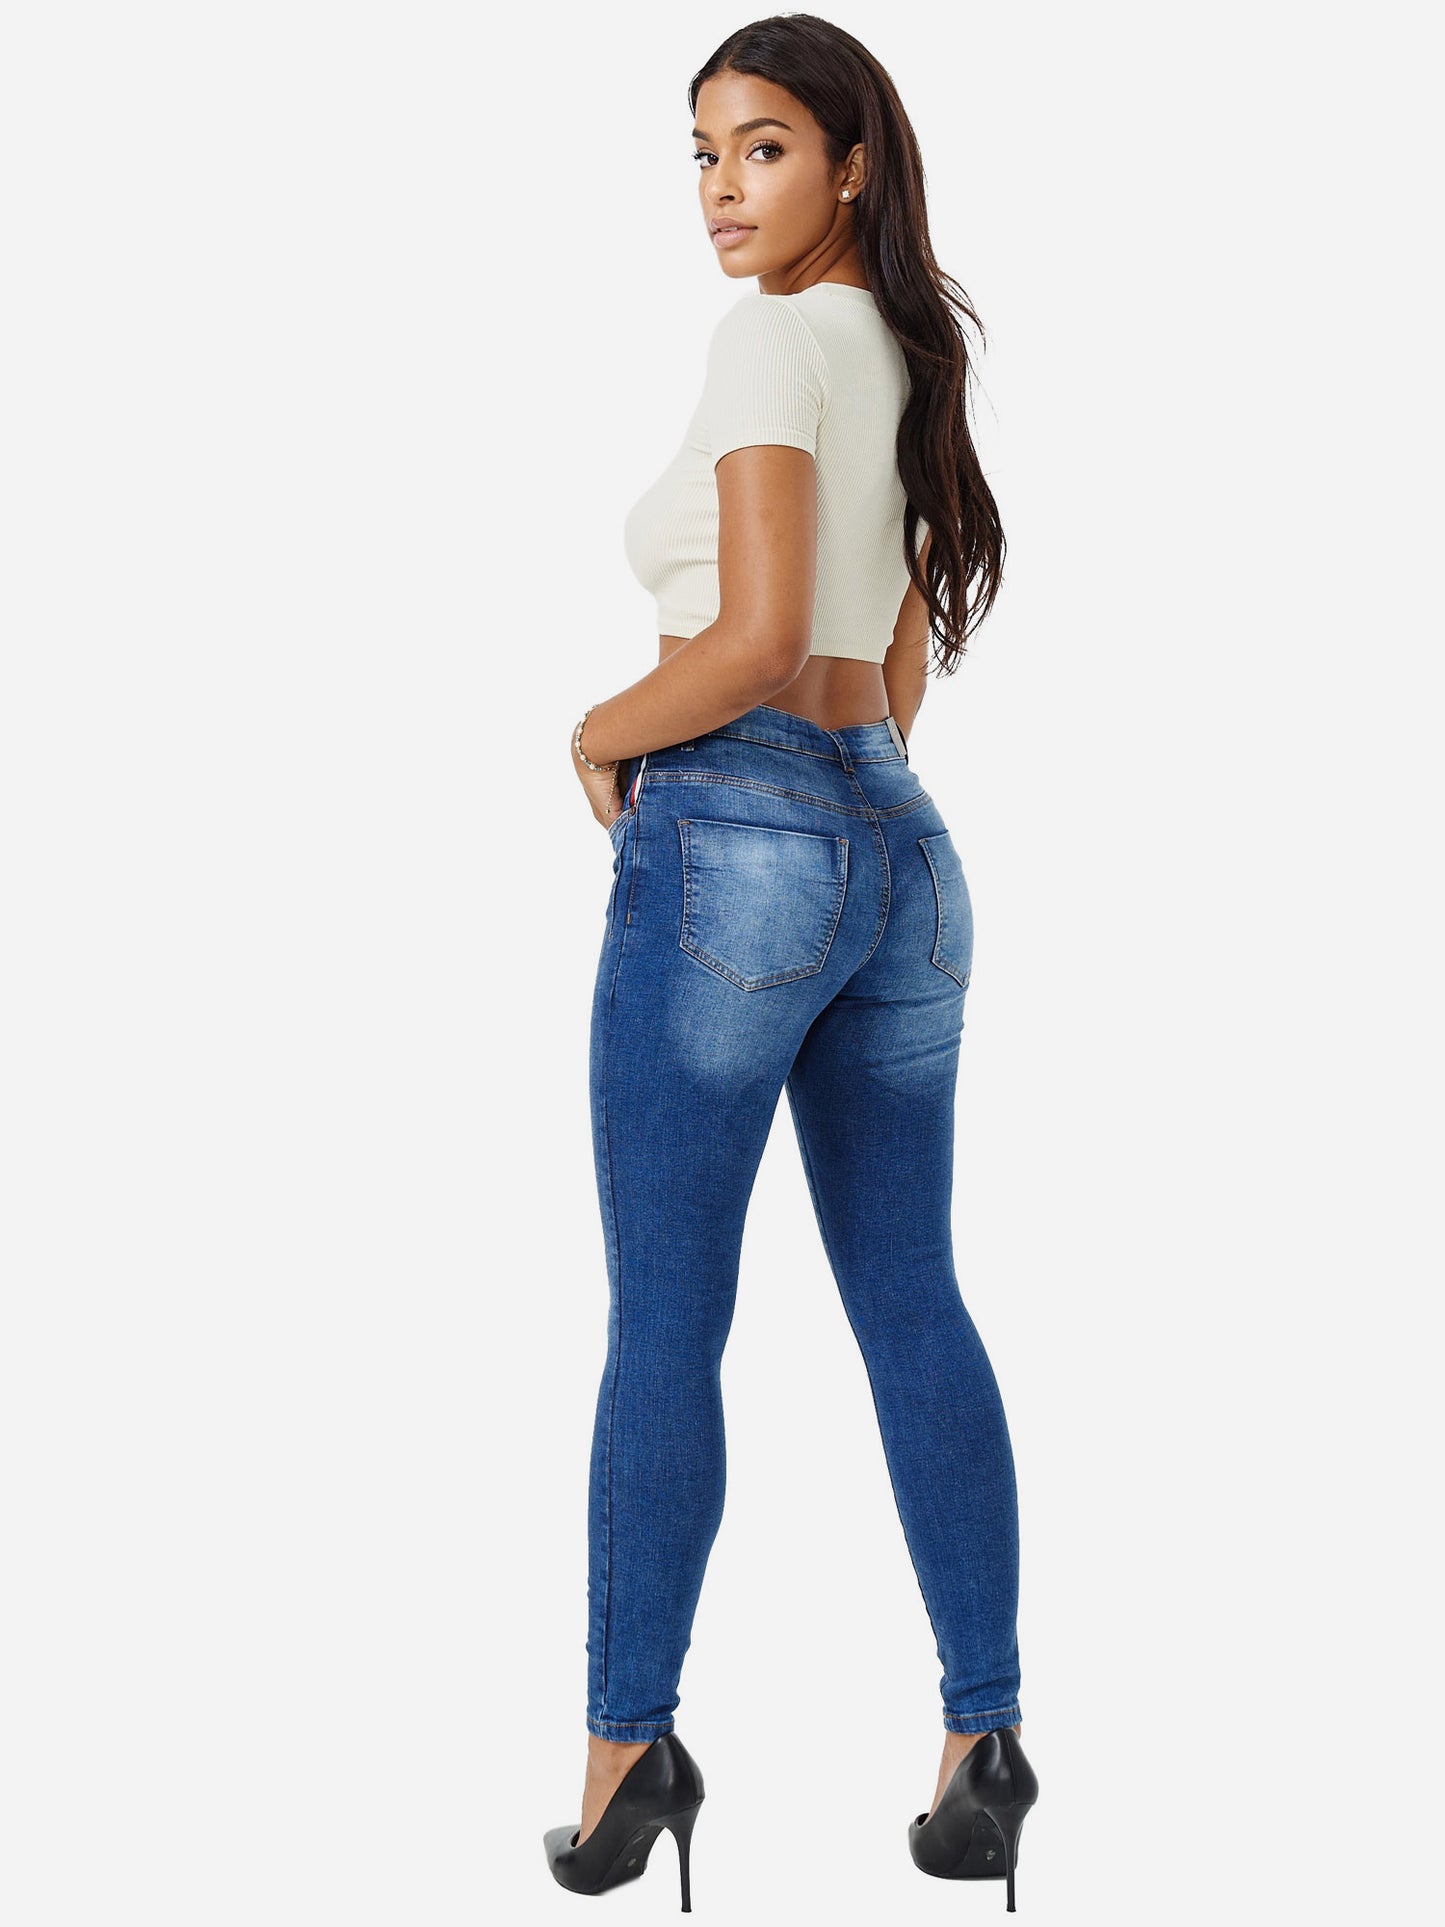 Tazzio Damen Skinny Fit Jeans F108